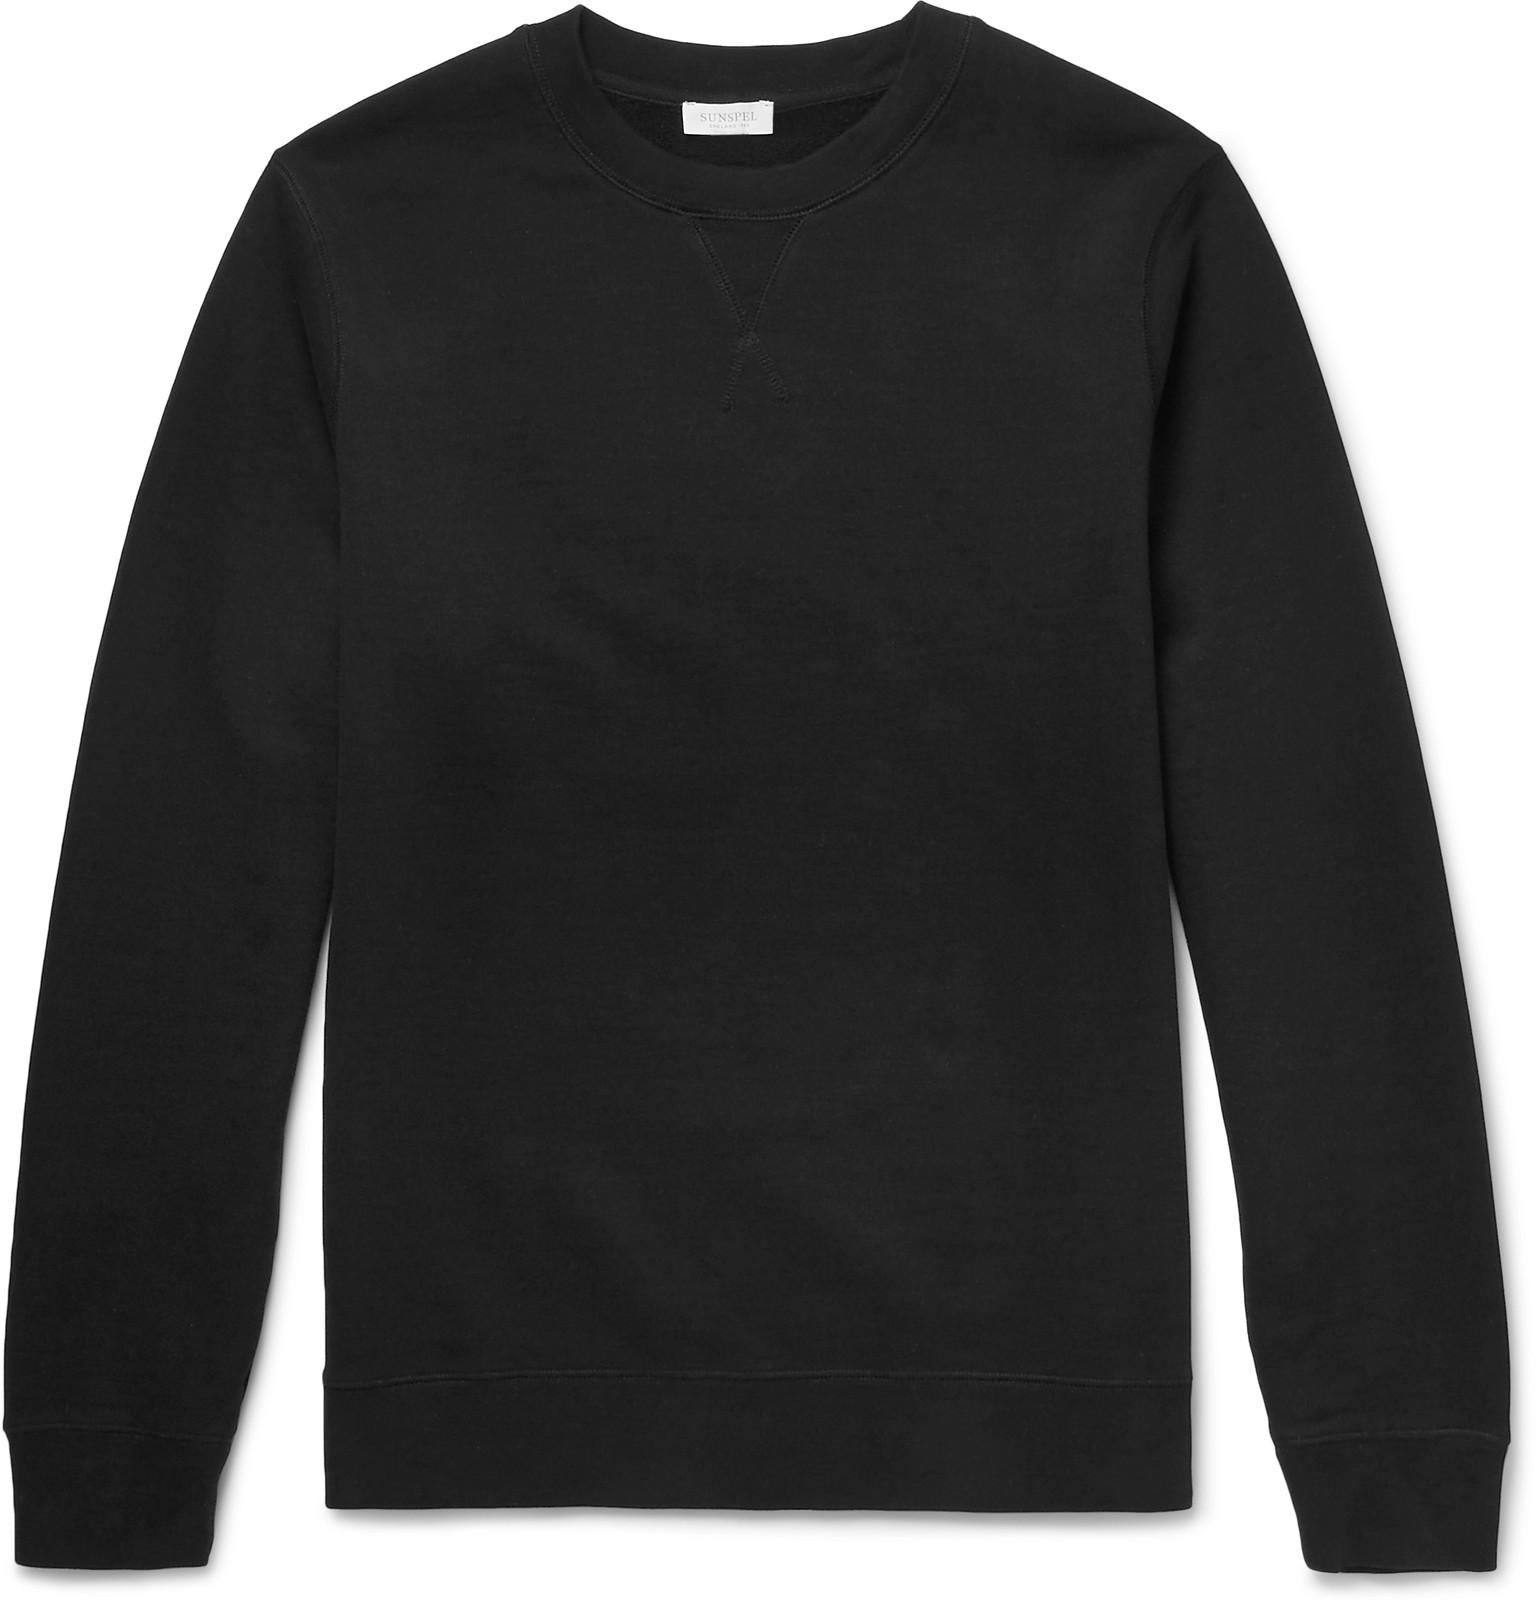 Sunspel Loopback Cotton-jersey Sweatshirt in Black for Men - Save 44% ...